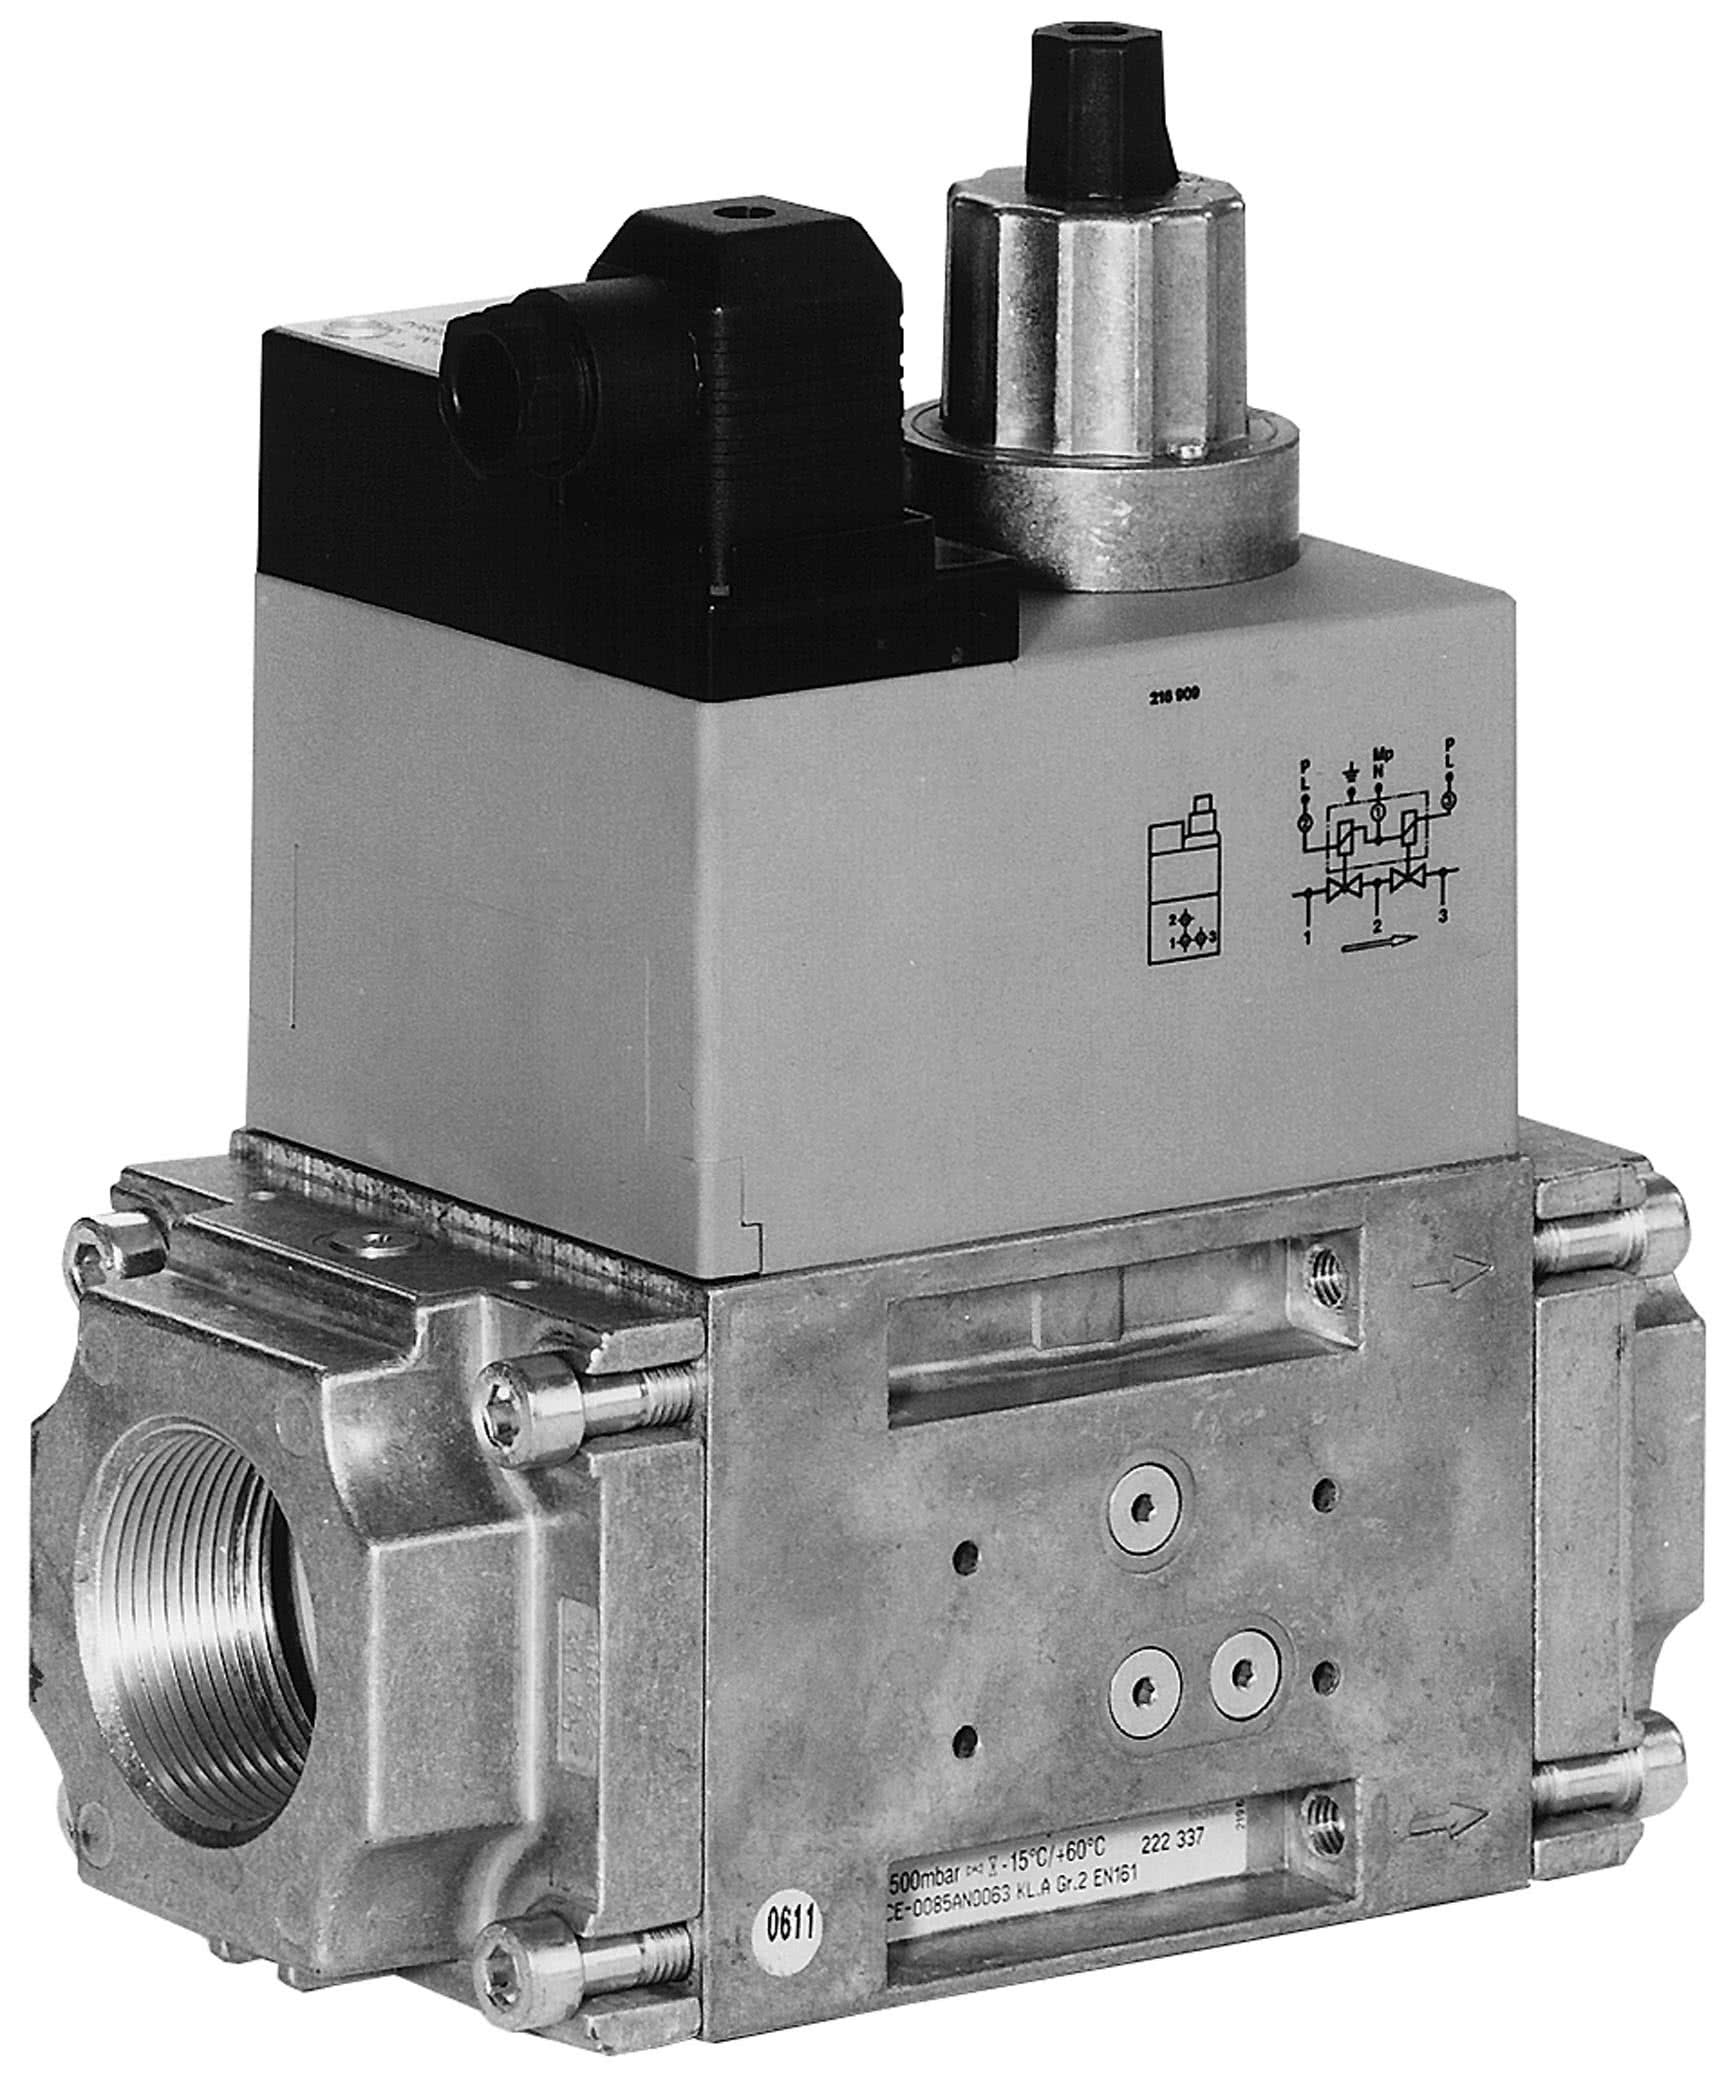 Двойной электромагнитный клапан DMV-DLE 512/11 AC 220-240 V IP 54 Steck | 222337 